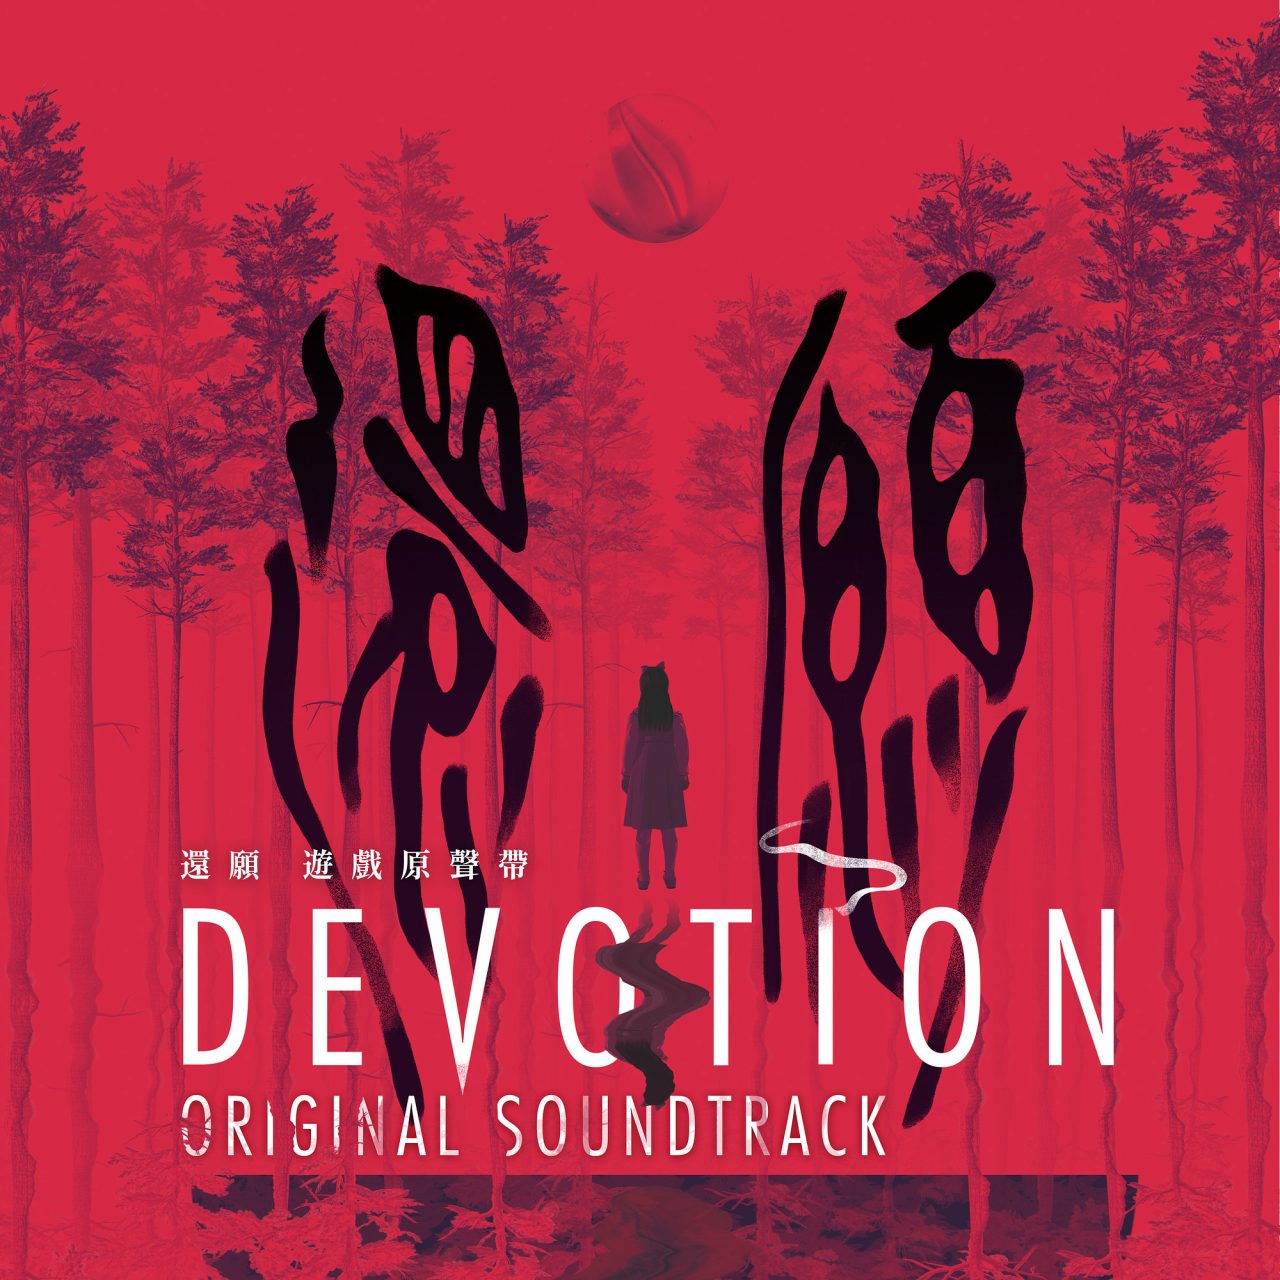 DEVOTION Original Soundtrack